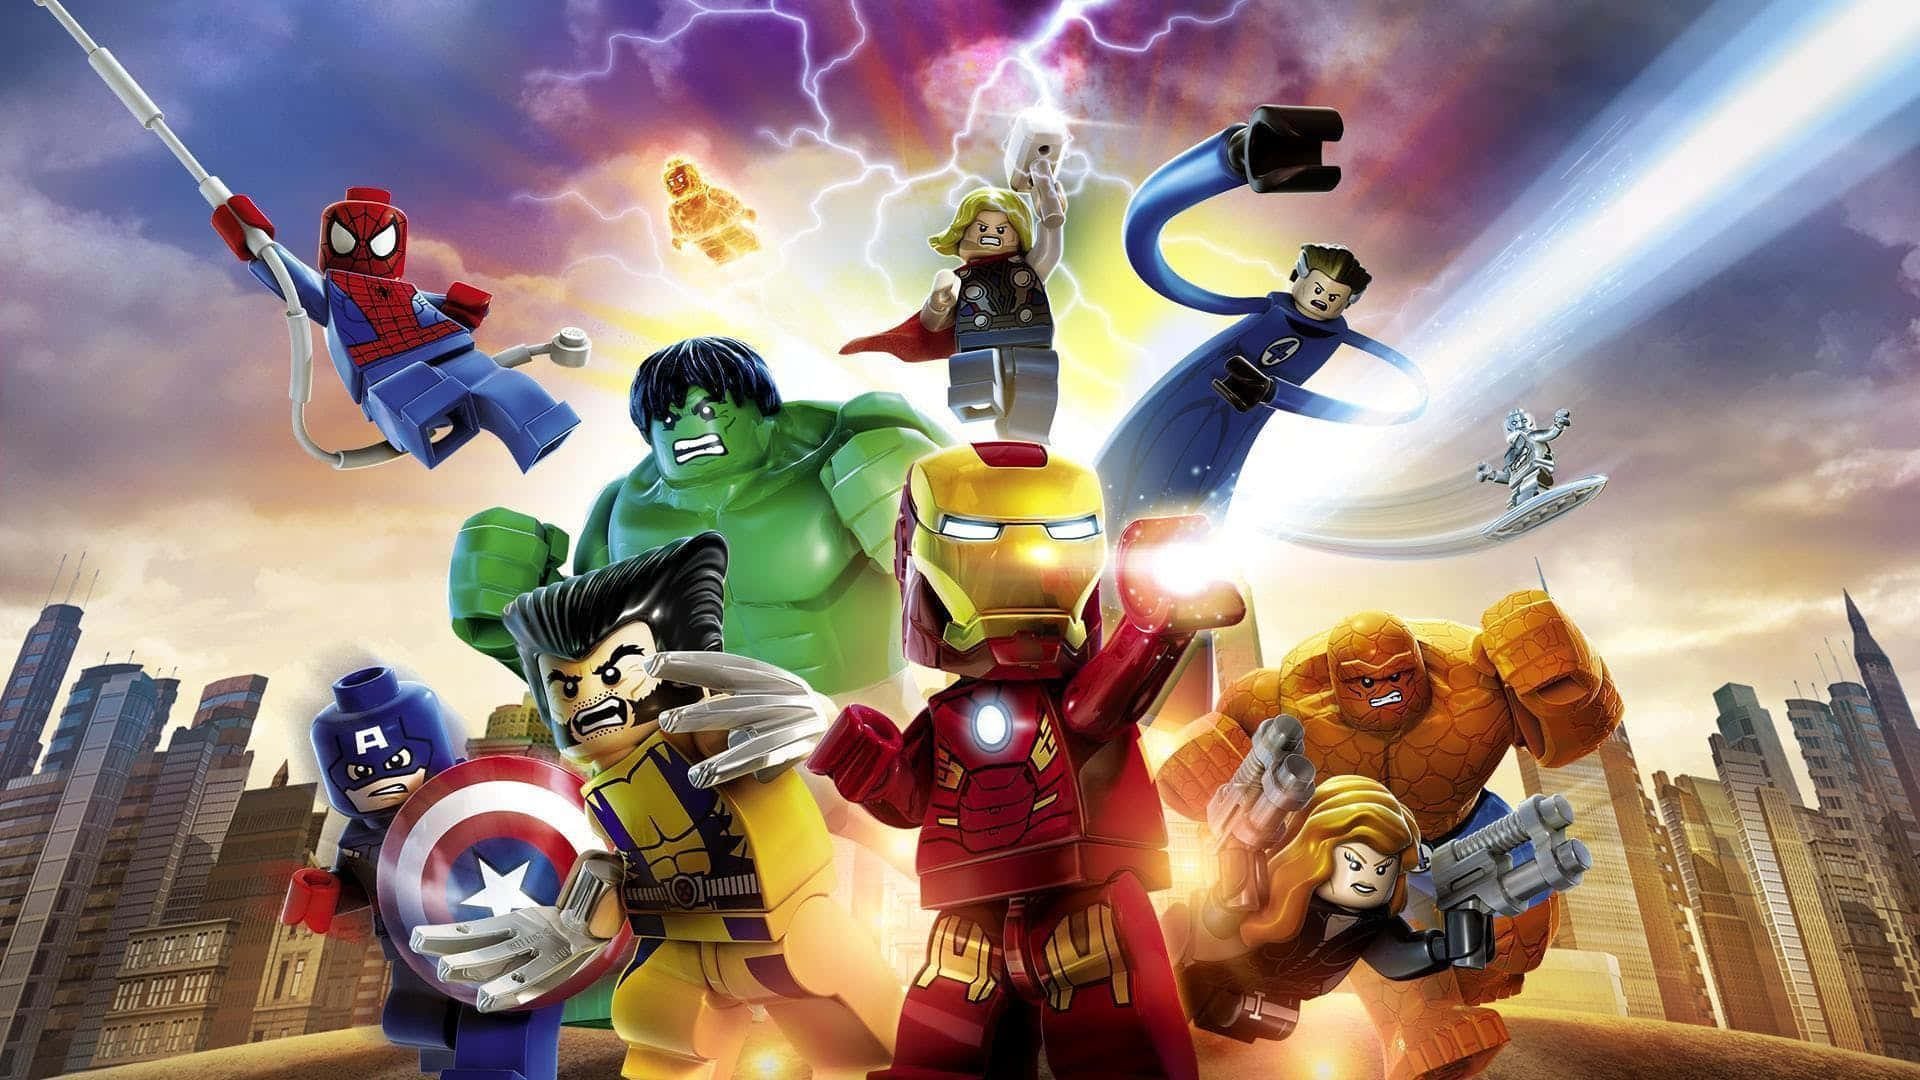 Superheroes Unite in Epic Video Game Battle Wallpaper